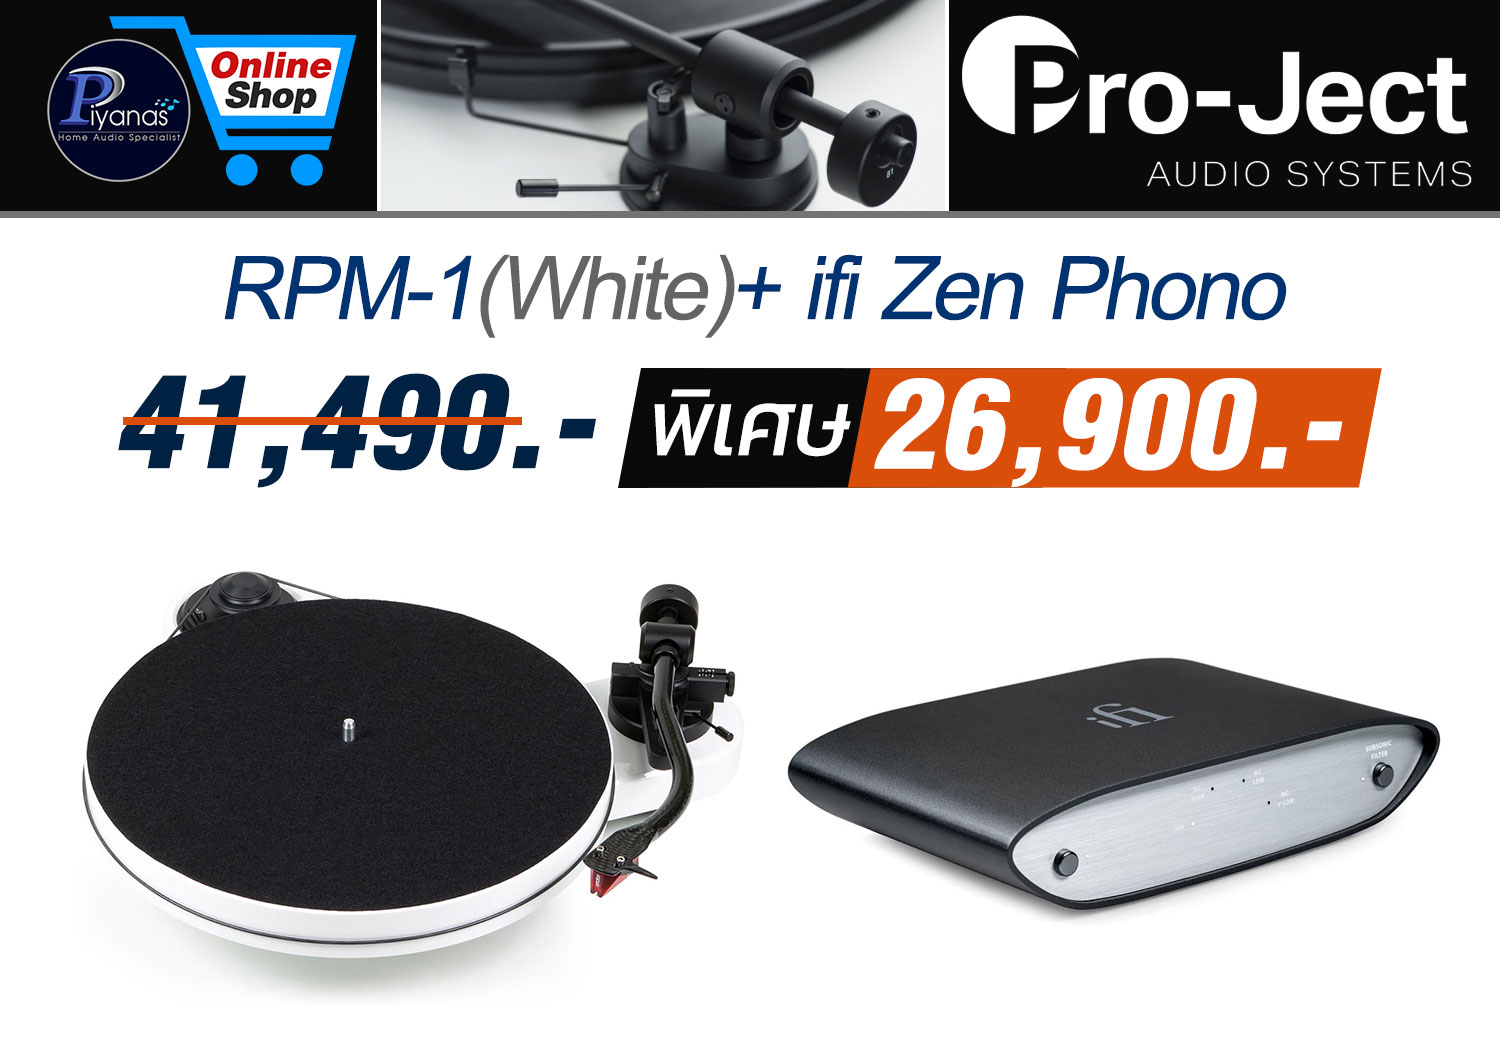 RPM-1 Carbon (White)
+ ifi Zen Phono